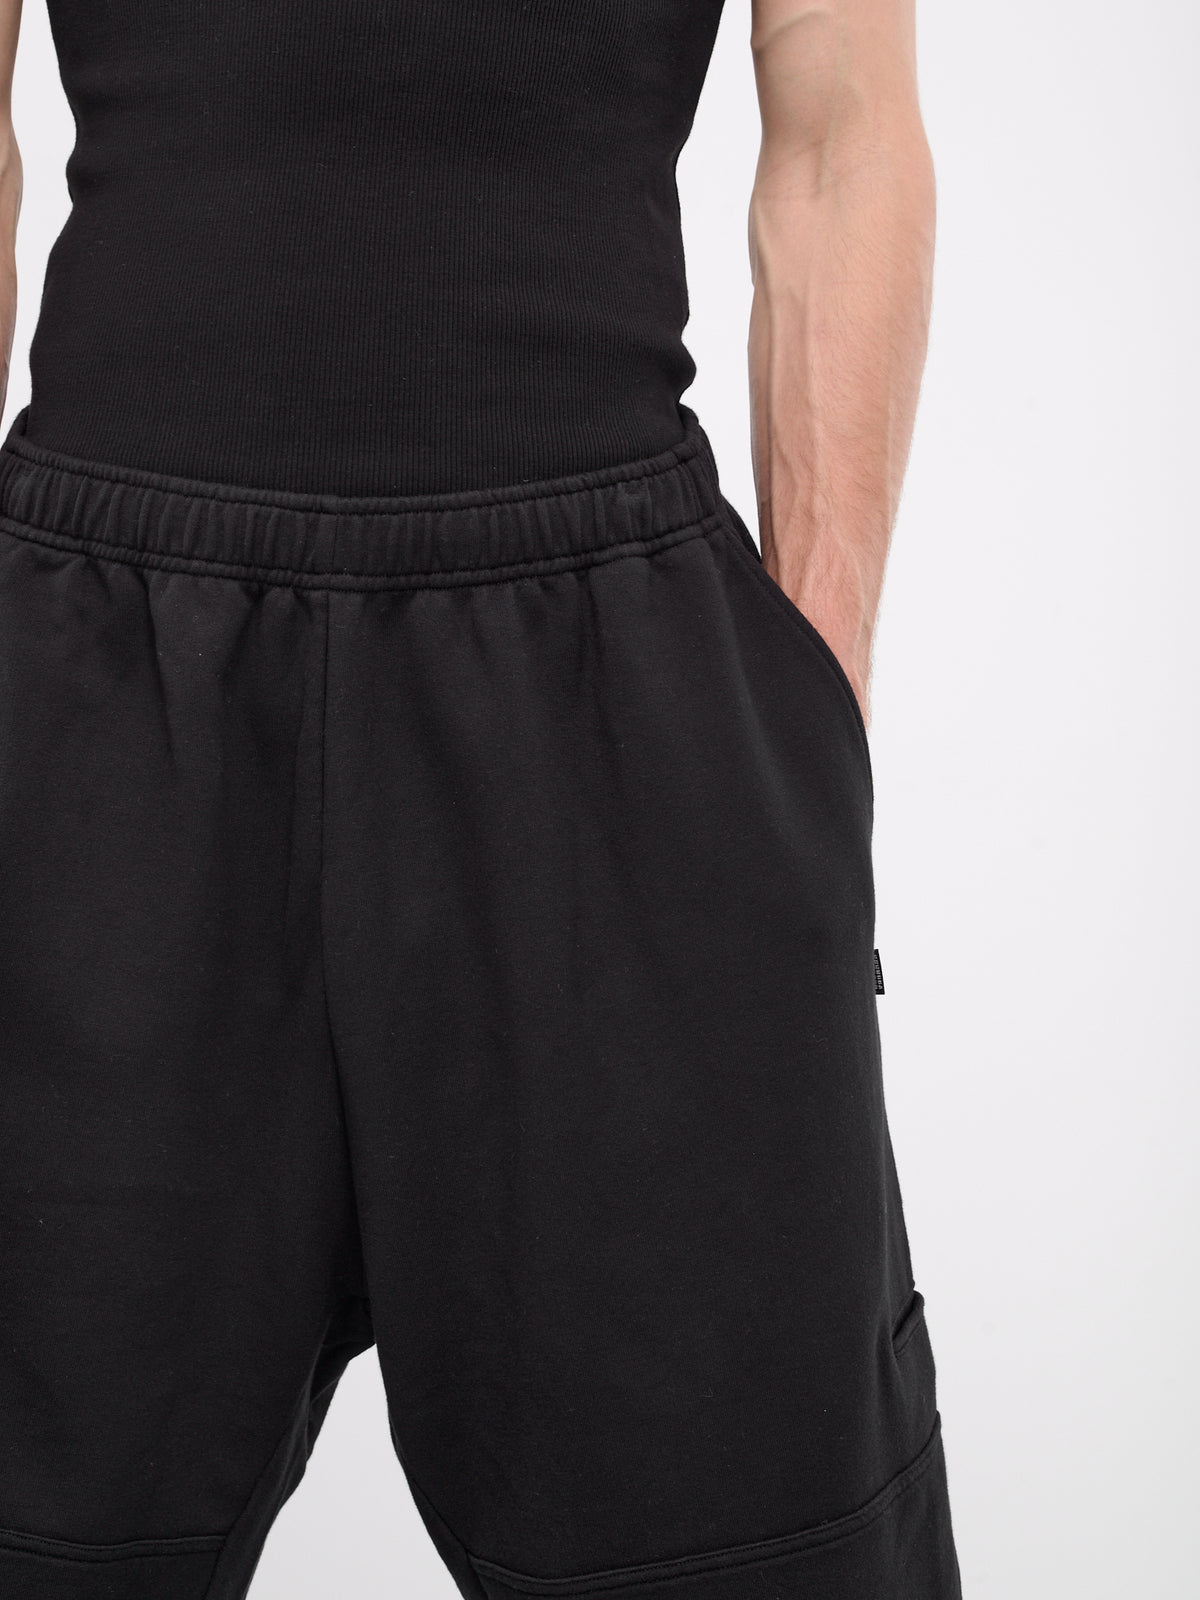 Cotton Shorts (SH2MU0003-M25003-BLACK)